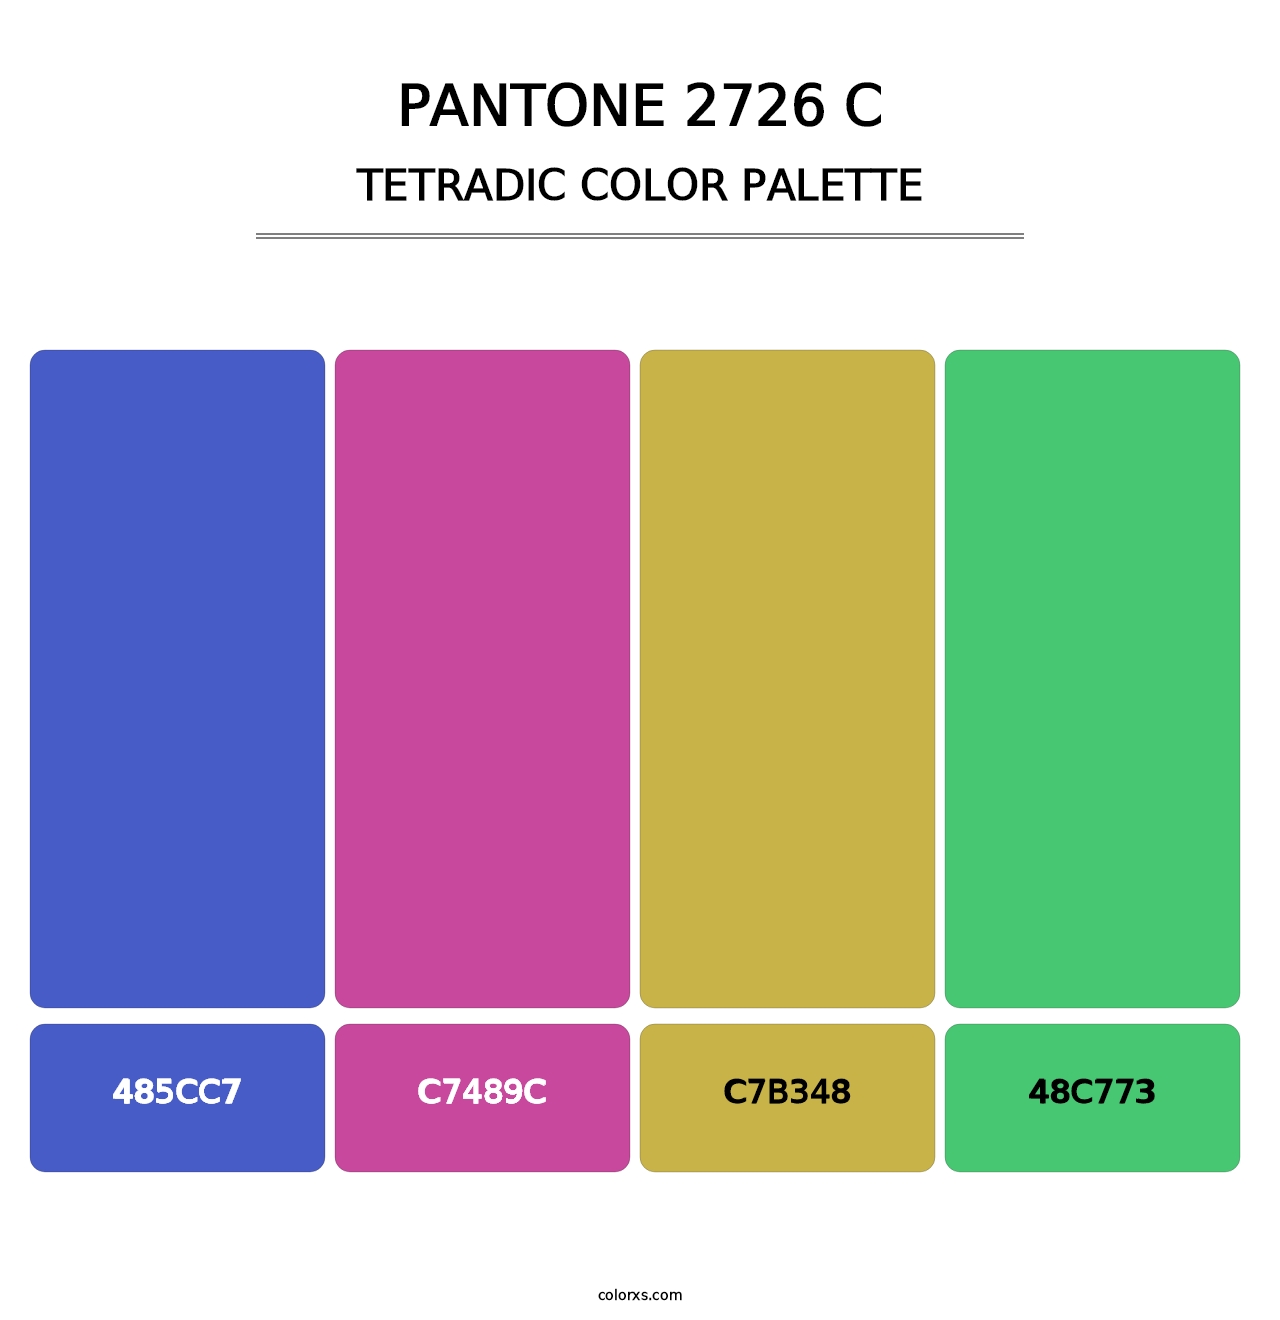 PANTONE 2726 C - Tetradic Color Palette